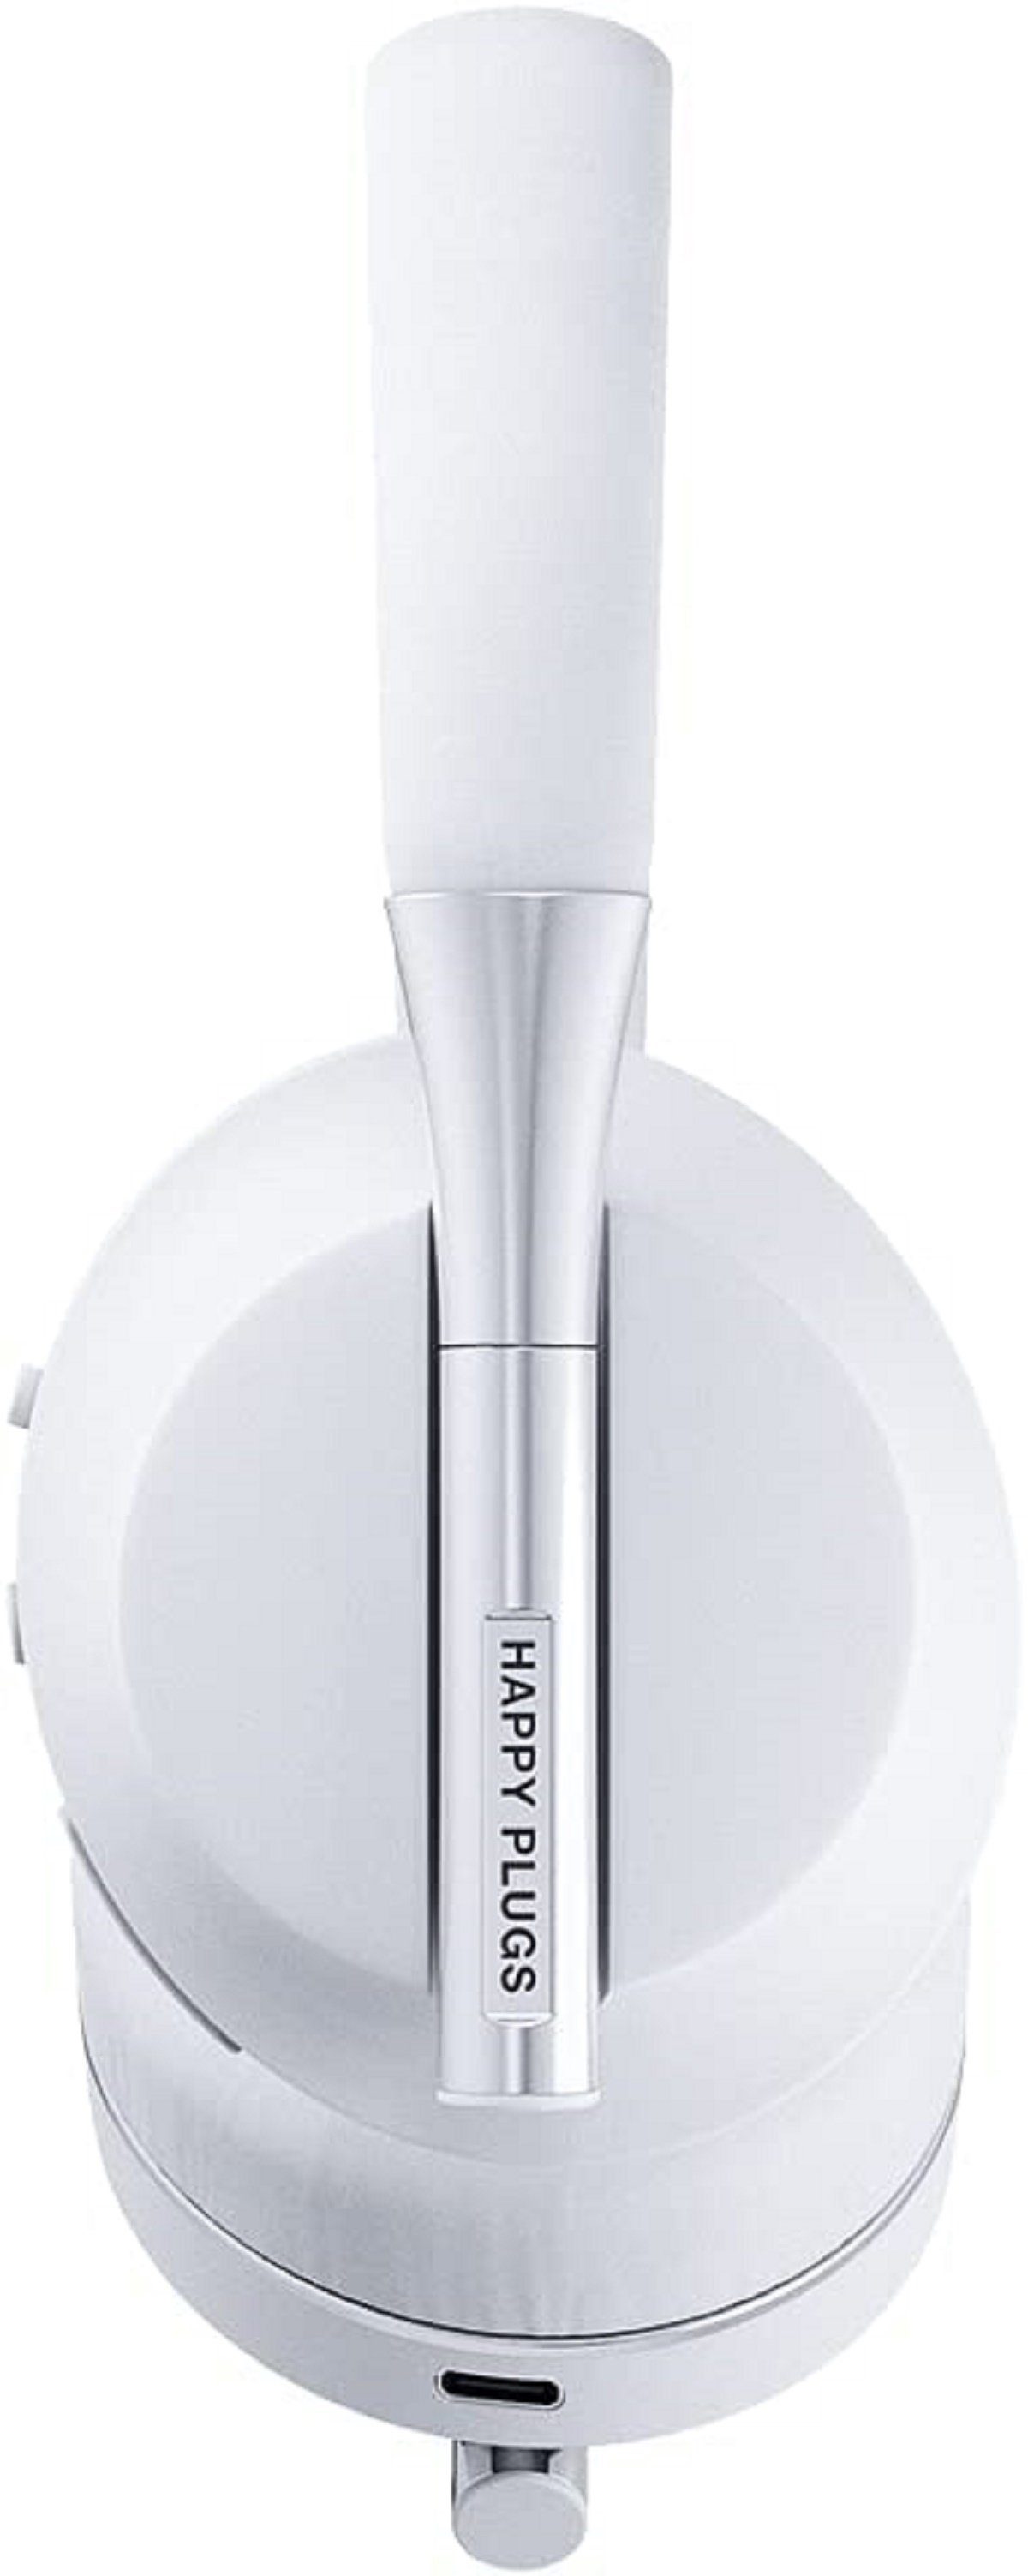 Happy Plugs Wireless 85dB Over-Ear-Kopfhörer Kabellos Headphones Bluetooth